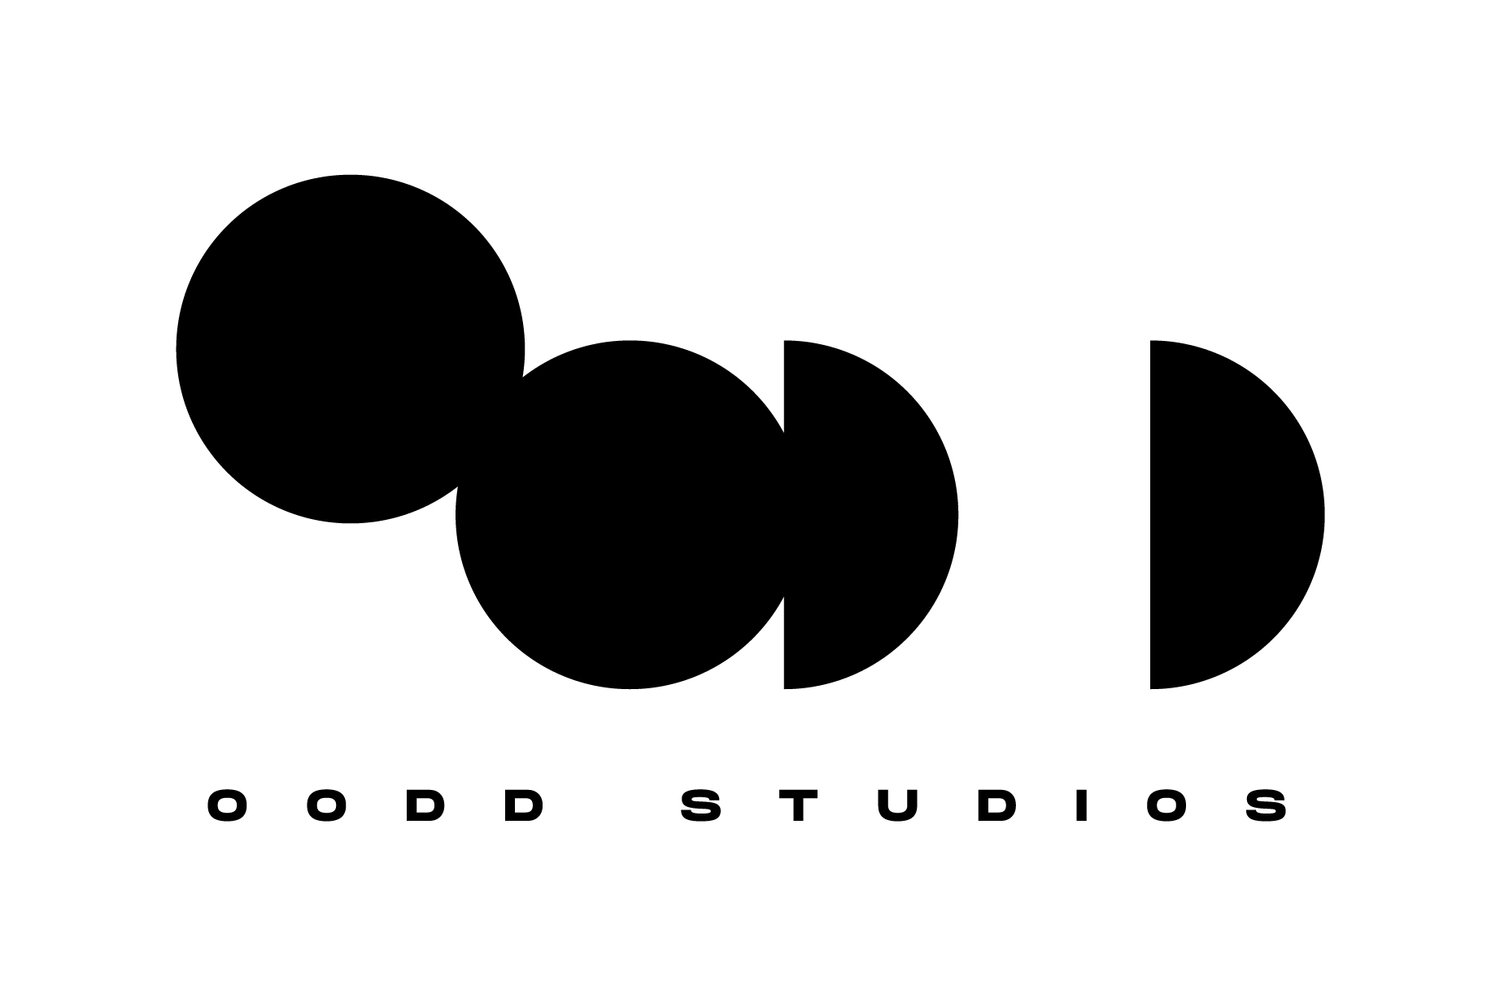 OODD Studios